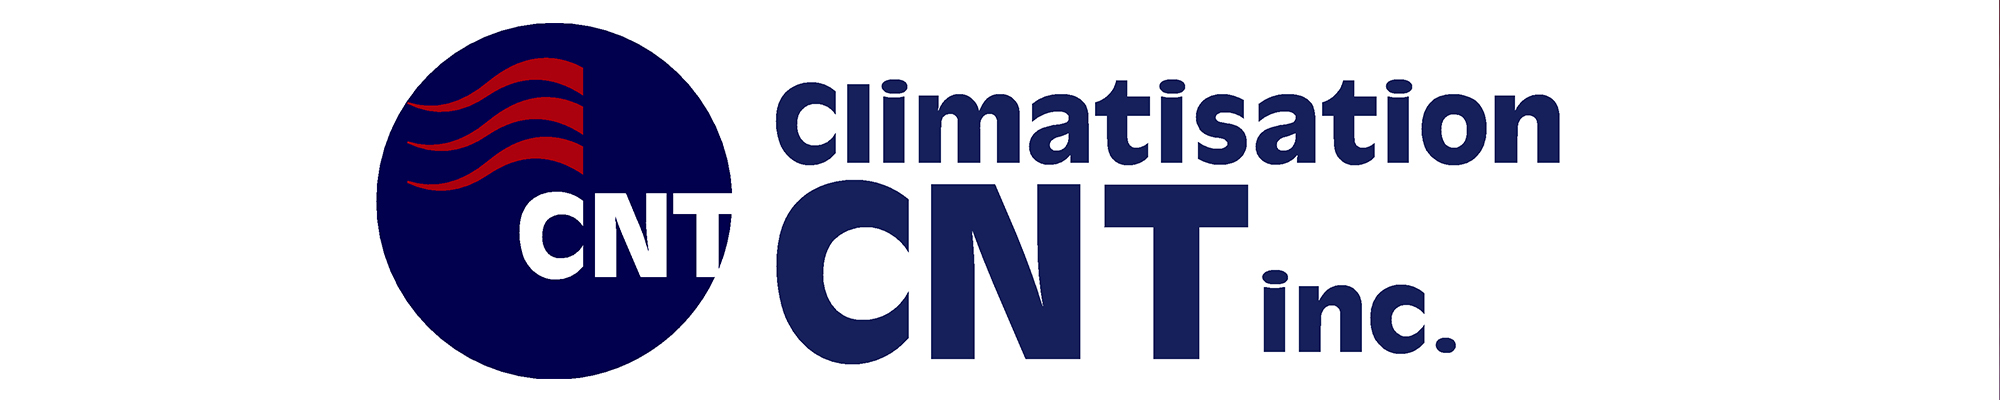 Logo climatisation cnt